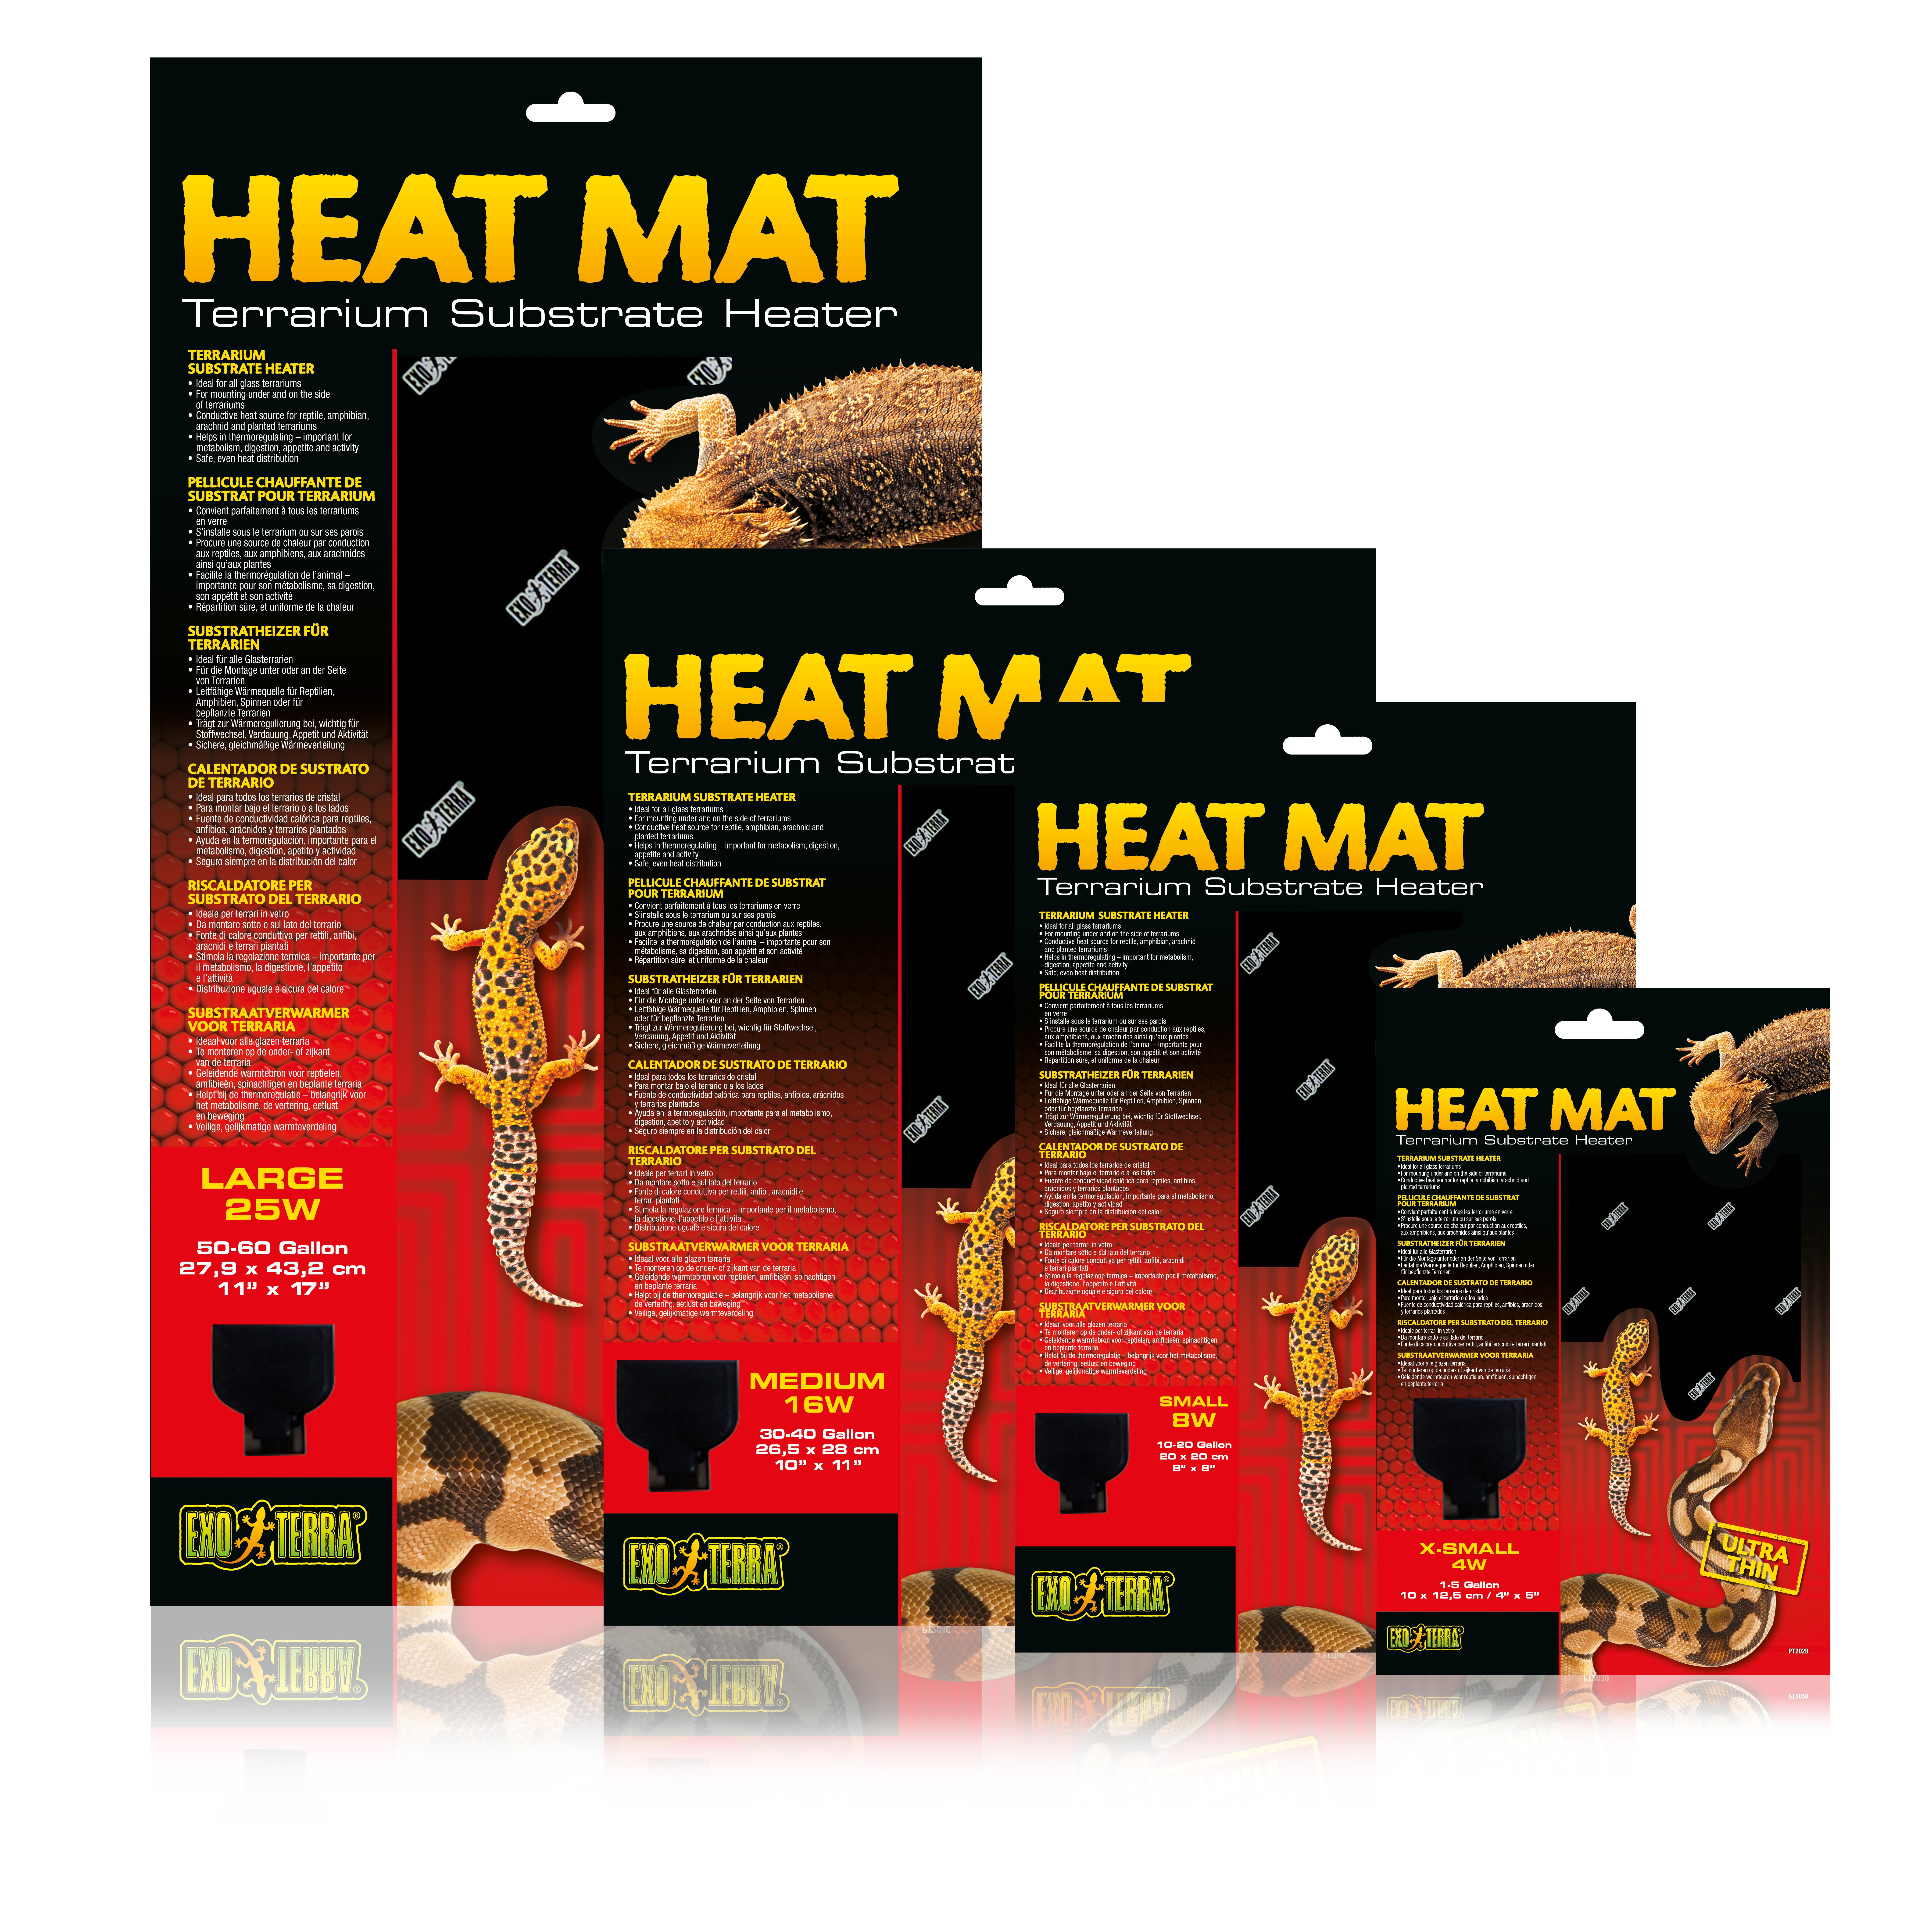 Ex heat mat substraatverwarmer - <Product shot>